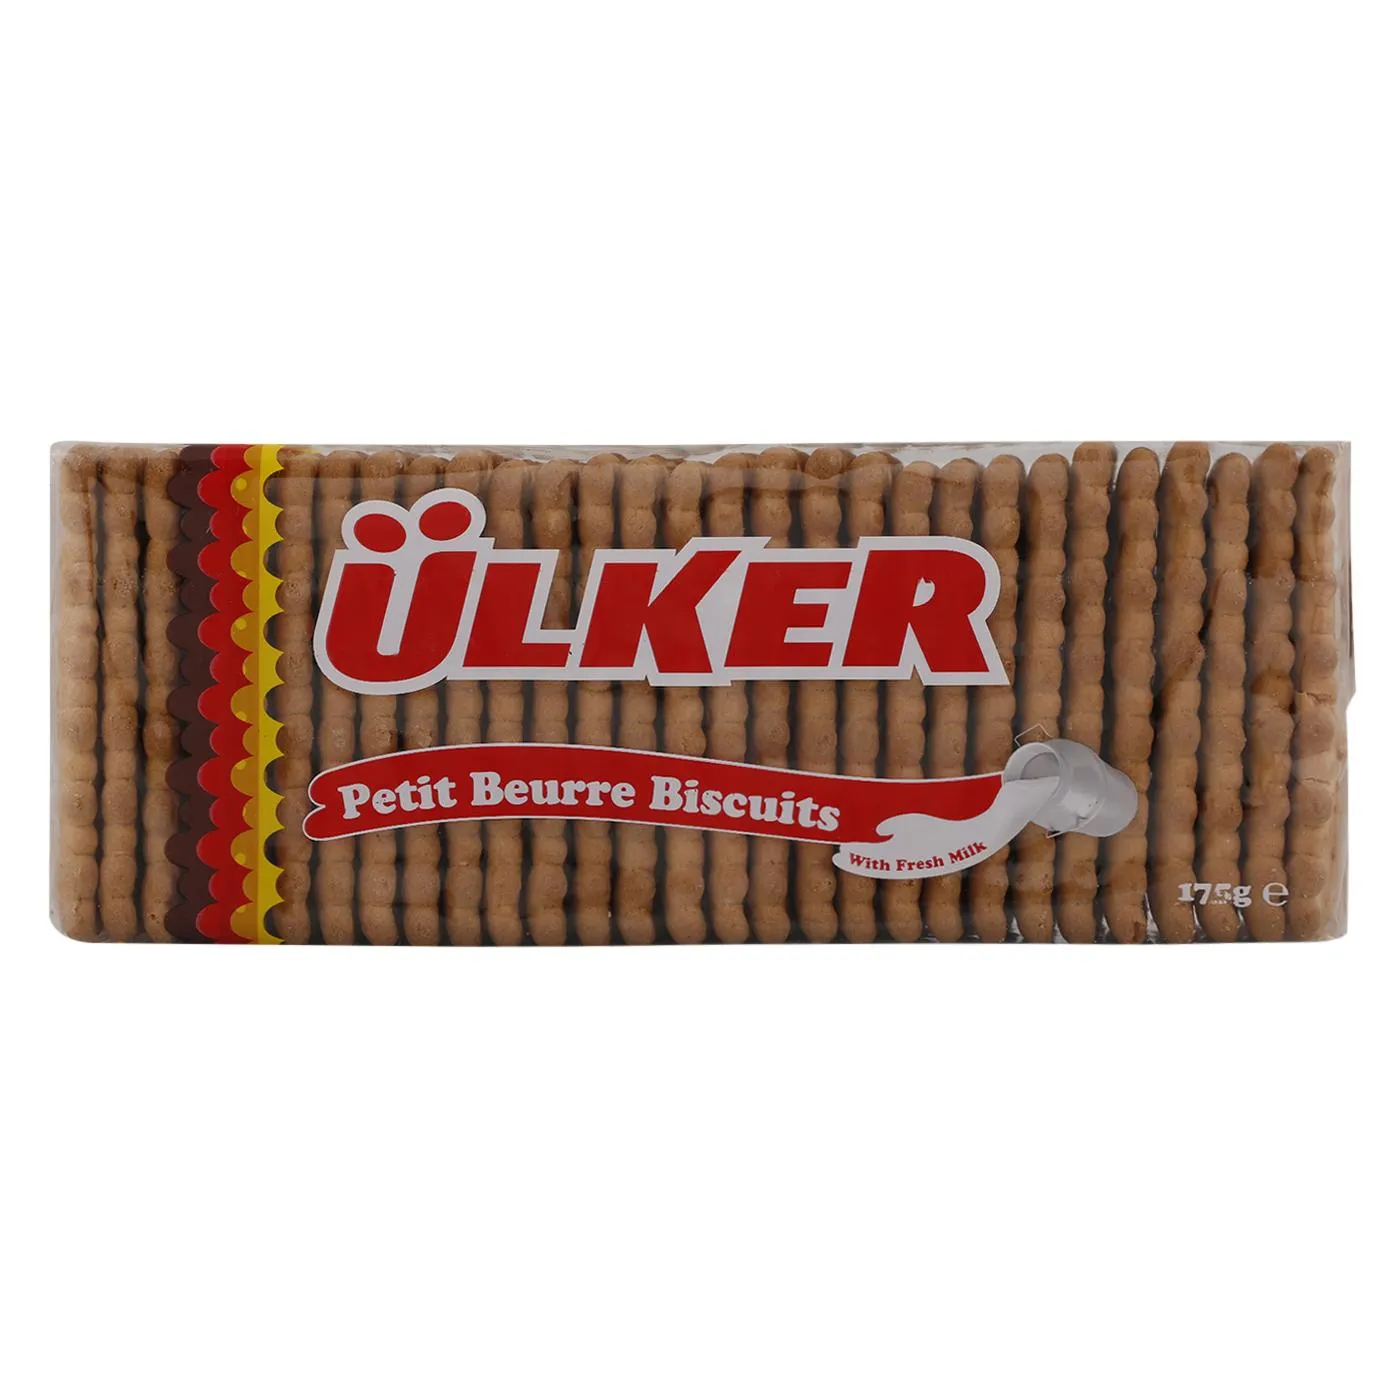 Ulker Petit Beurre Biscuits, 175 g (Pack of 16) - 01010040 (JBIE06BEA)